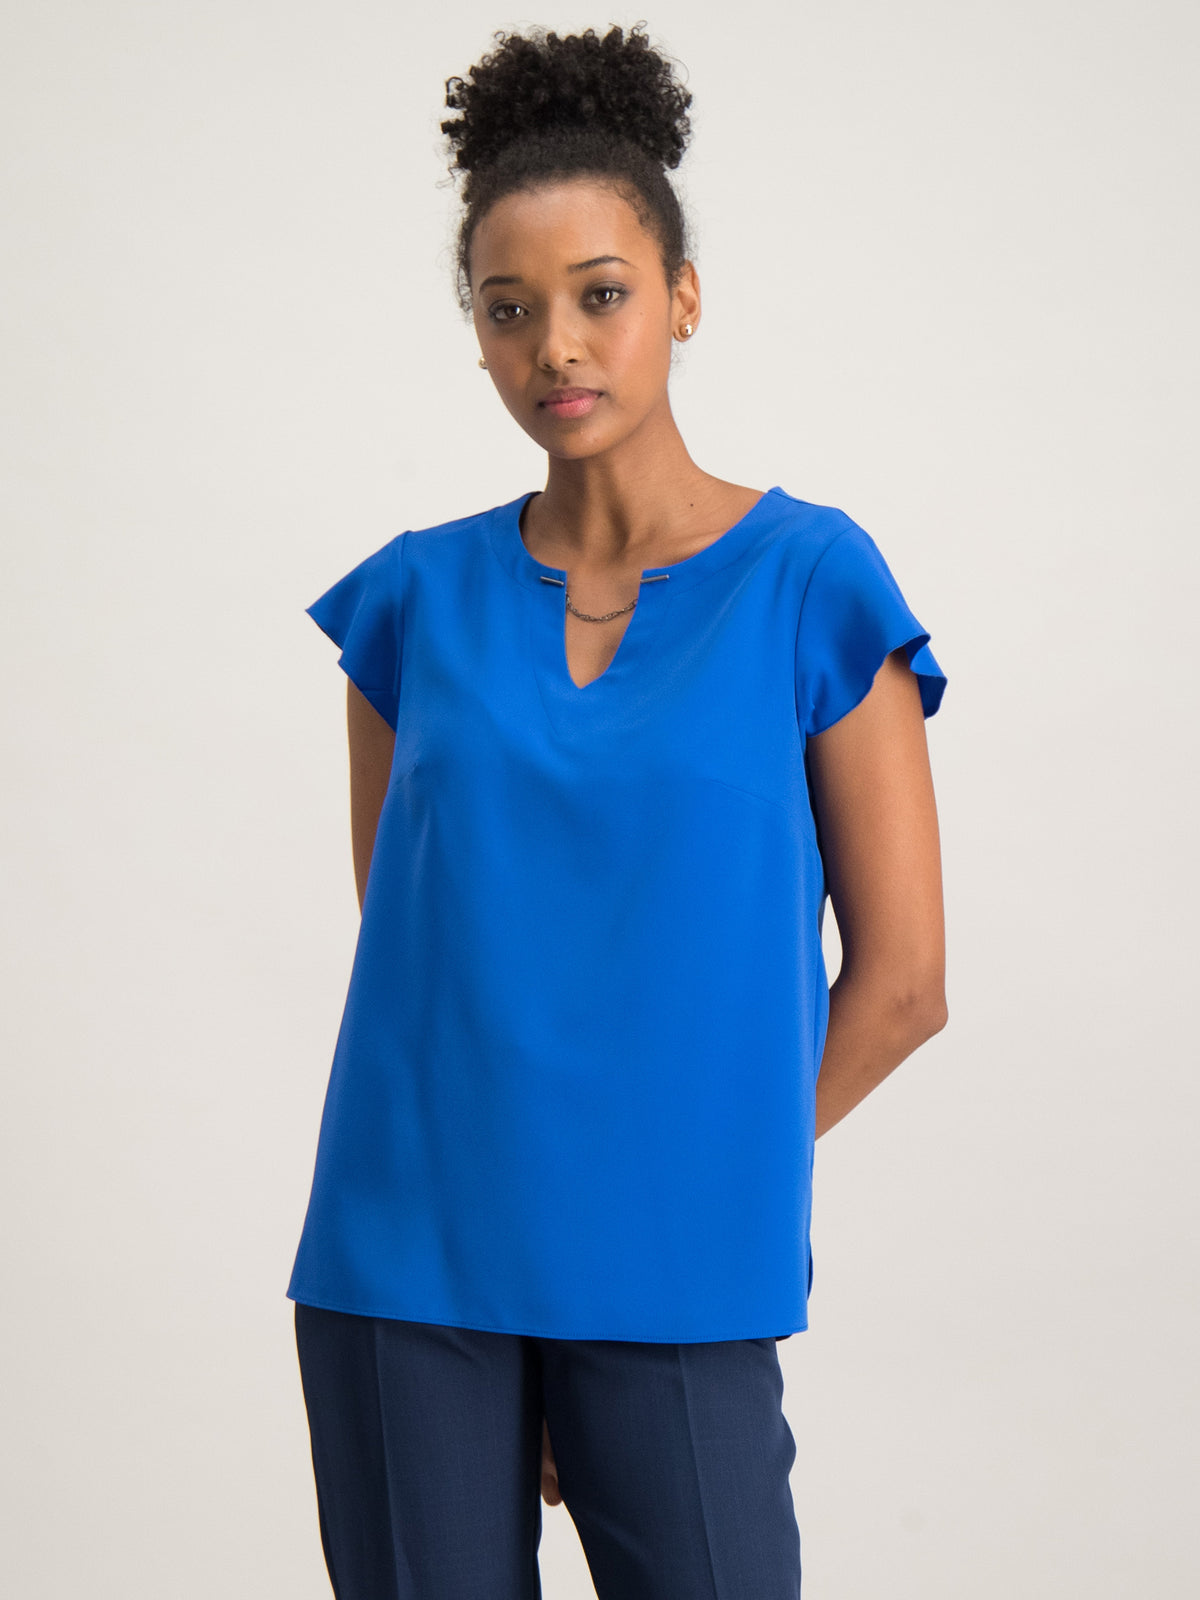 Misty cap sleeve blouse - bright blue